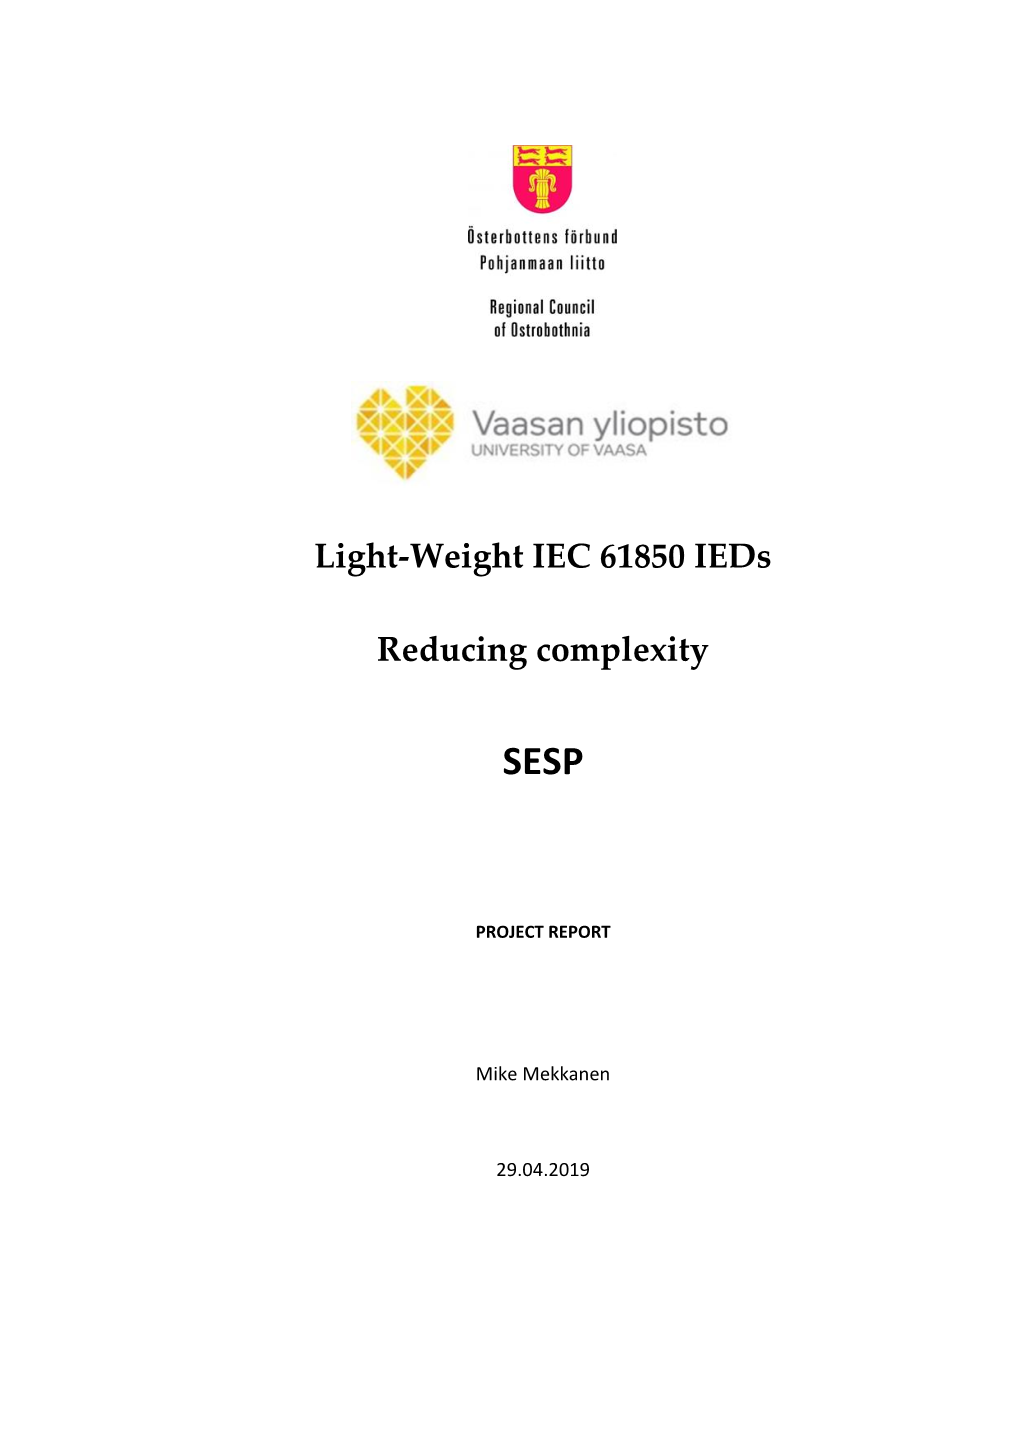 Light-Weight IEC 61850 Ieds Reducing Complexity